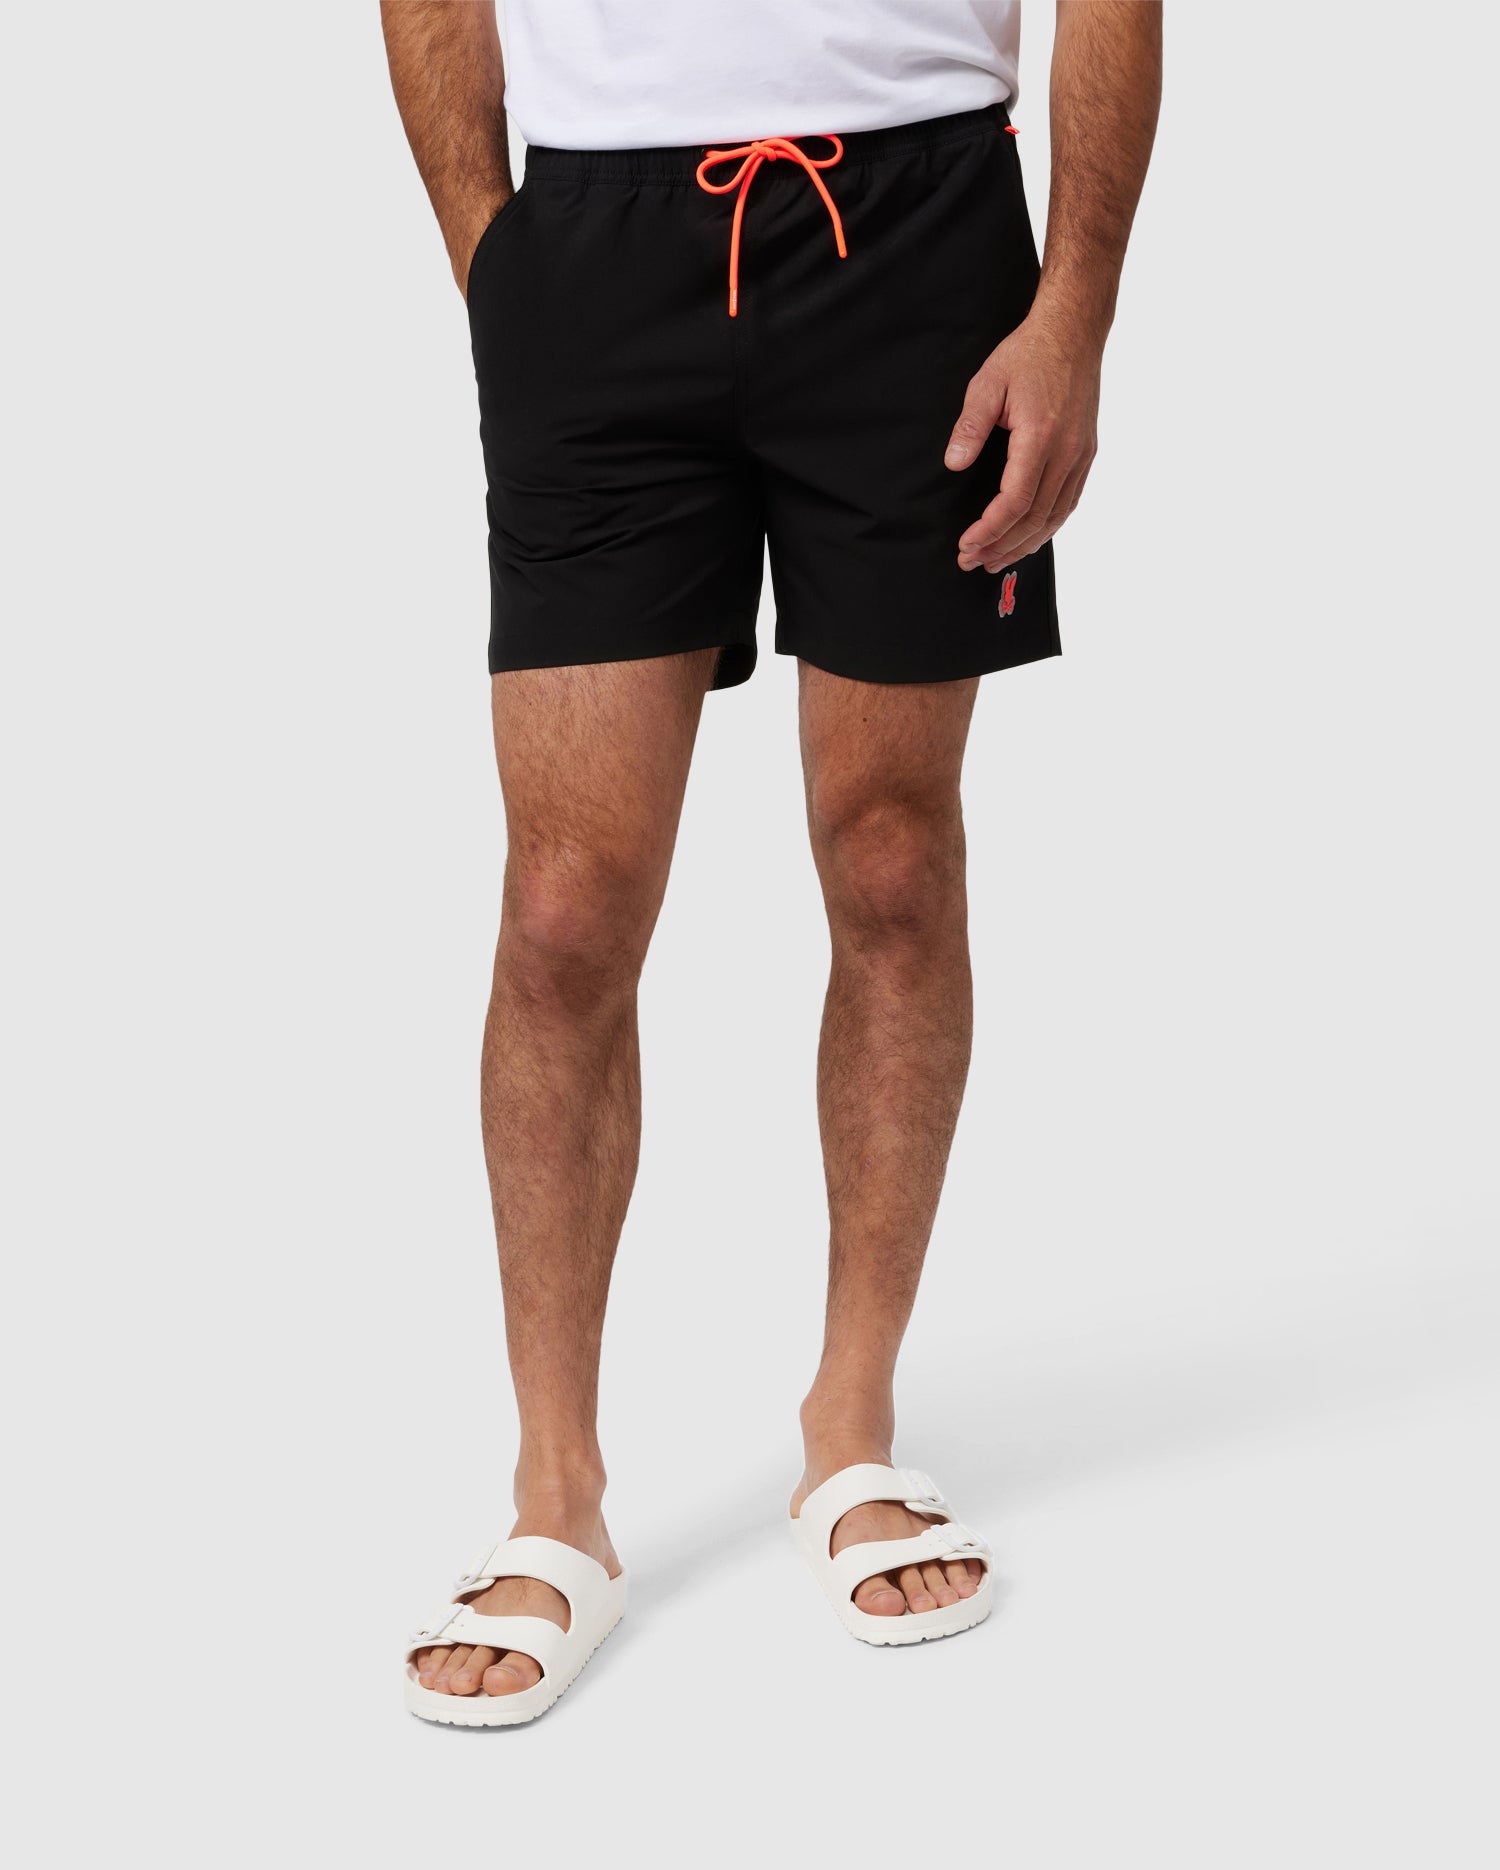 Louis Vuitton Men's XL Monogram Logo Swim Trunk Shorts Bathing